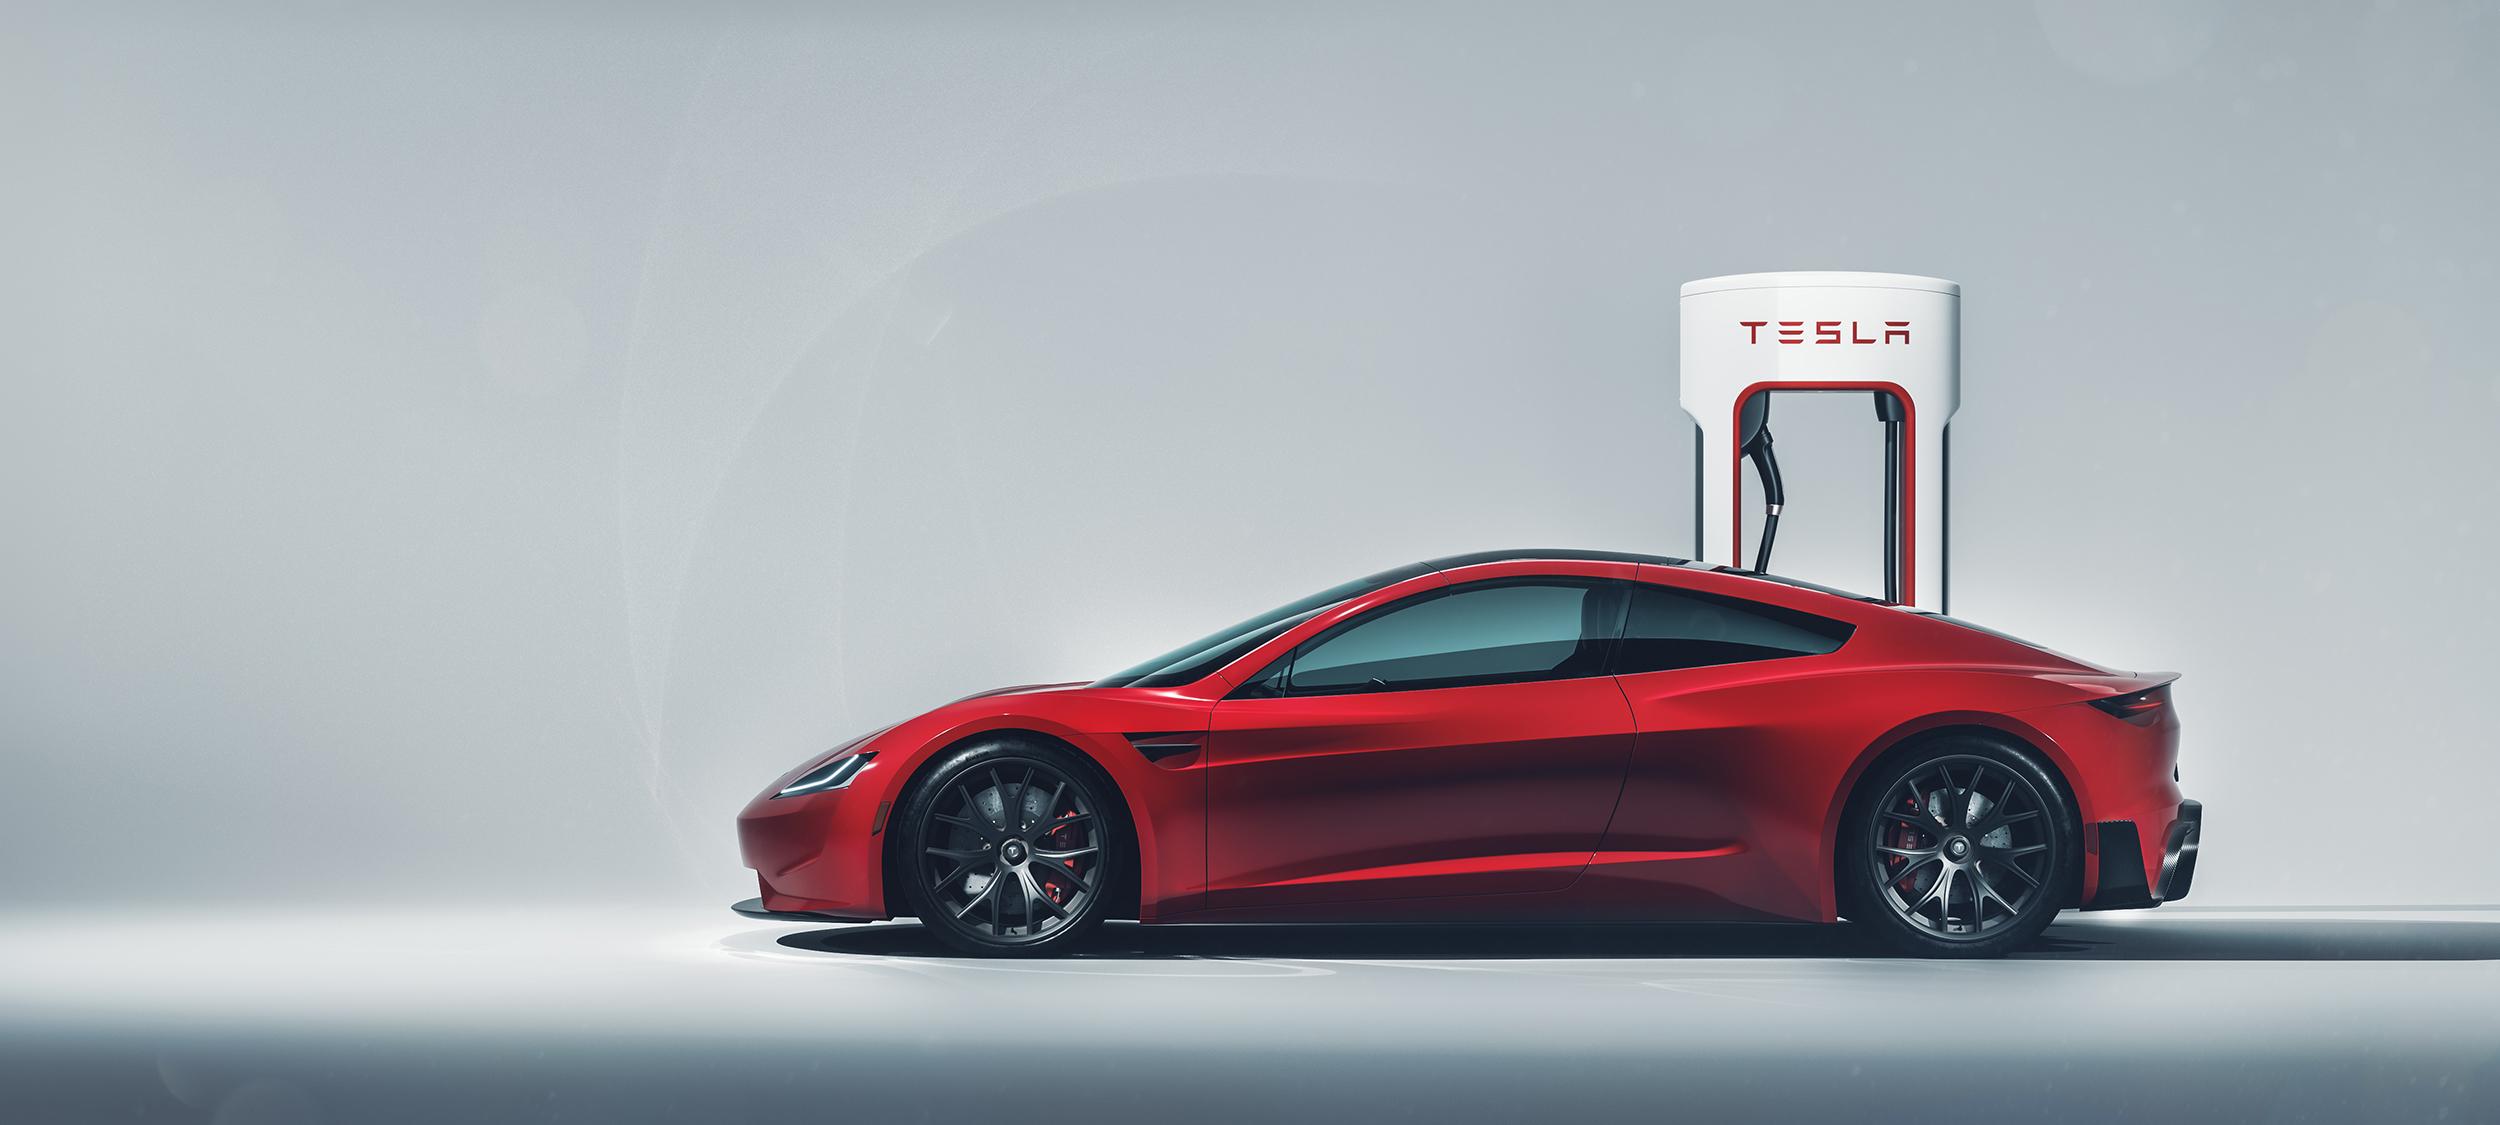 Tesla Roadster Charging Wallpaper HD Cars 4k